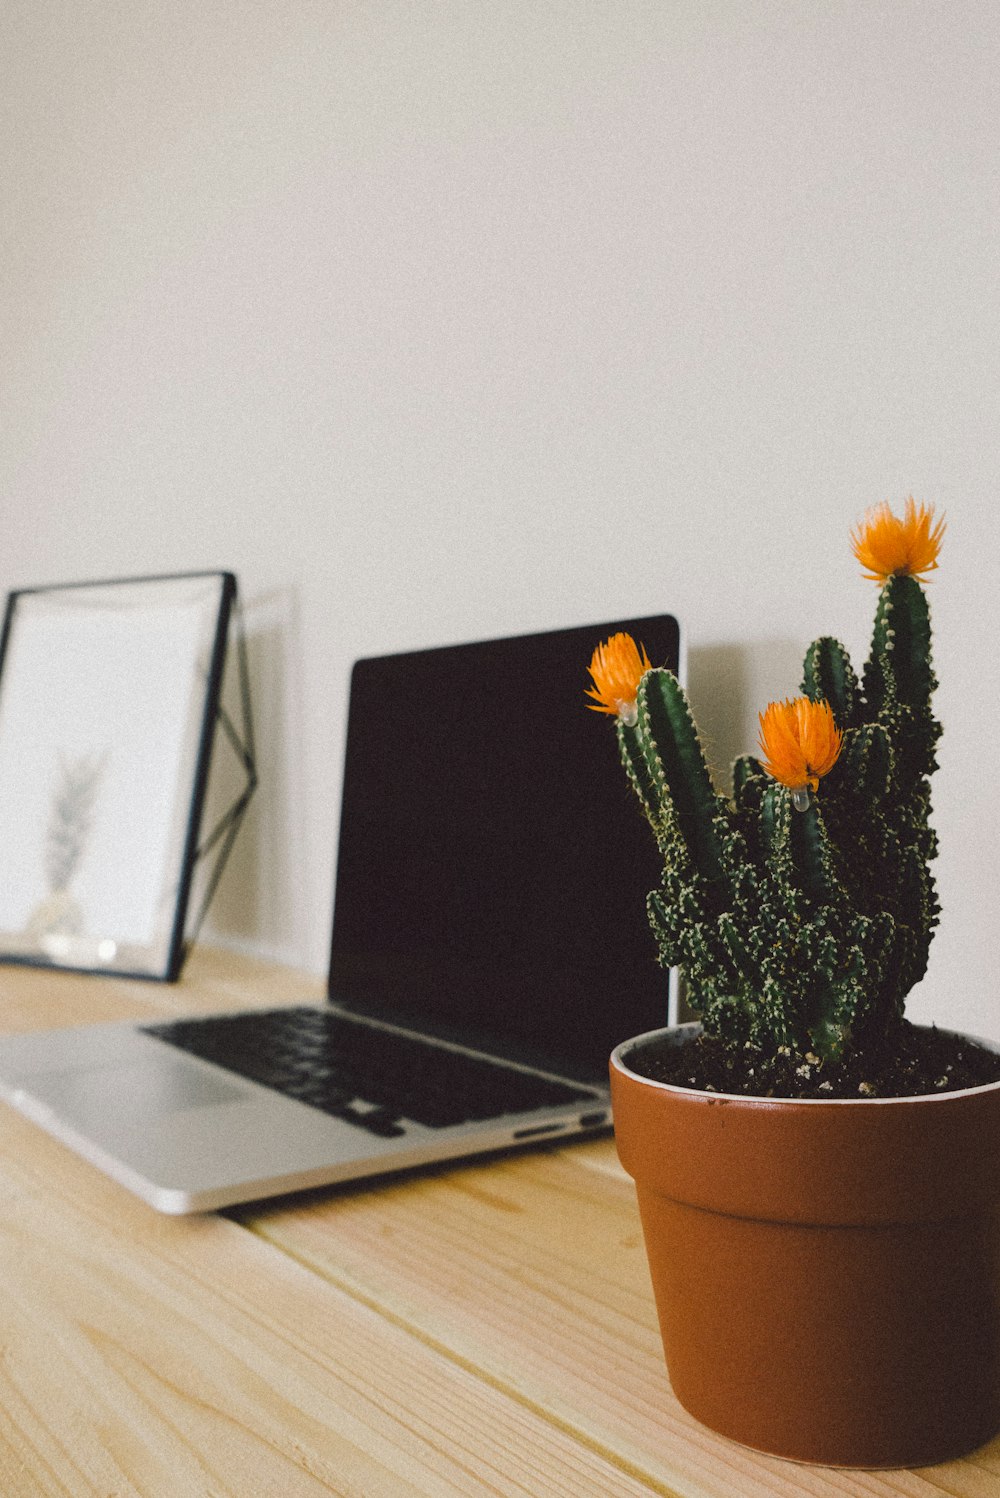 cactus beside laptop